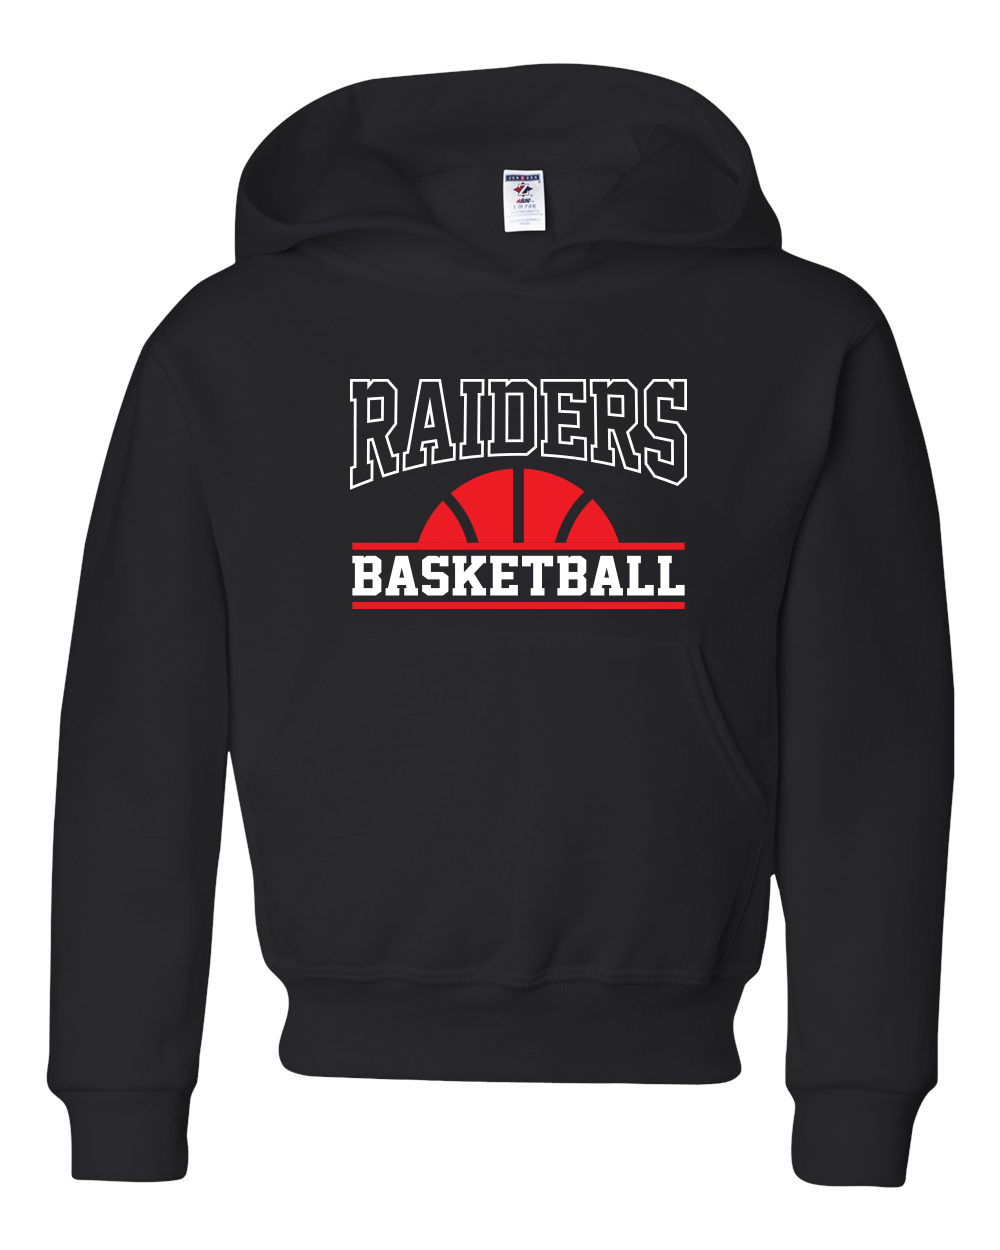 Raiders Basketball - NuBlend Youth Hooded Sweatshirt